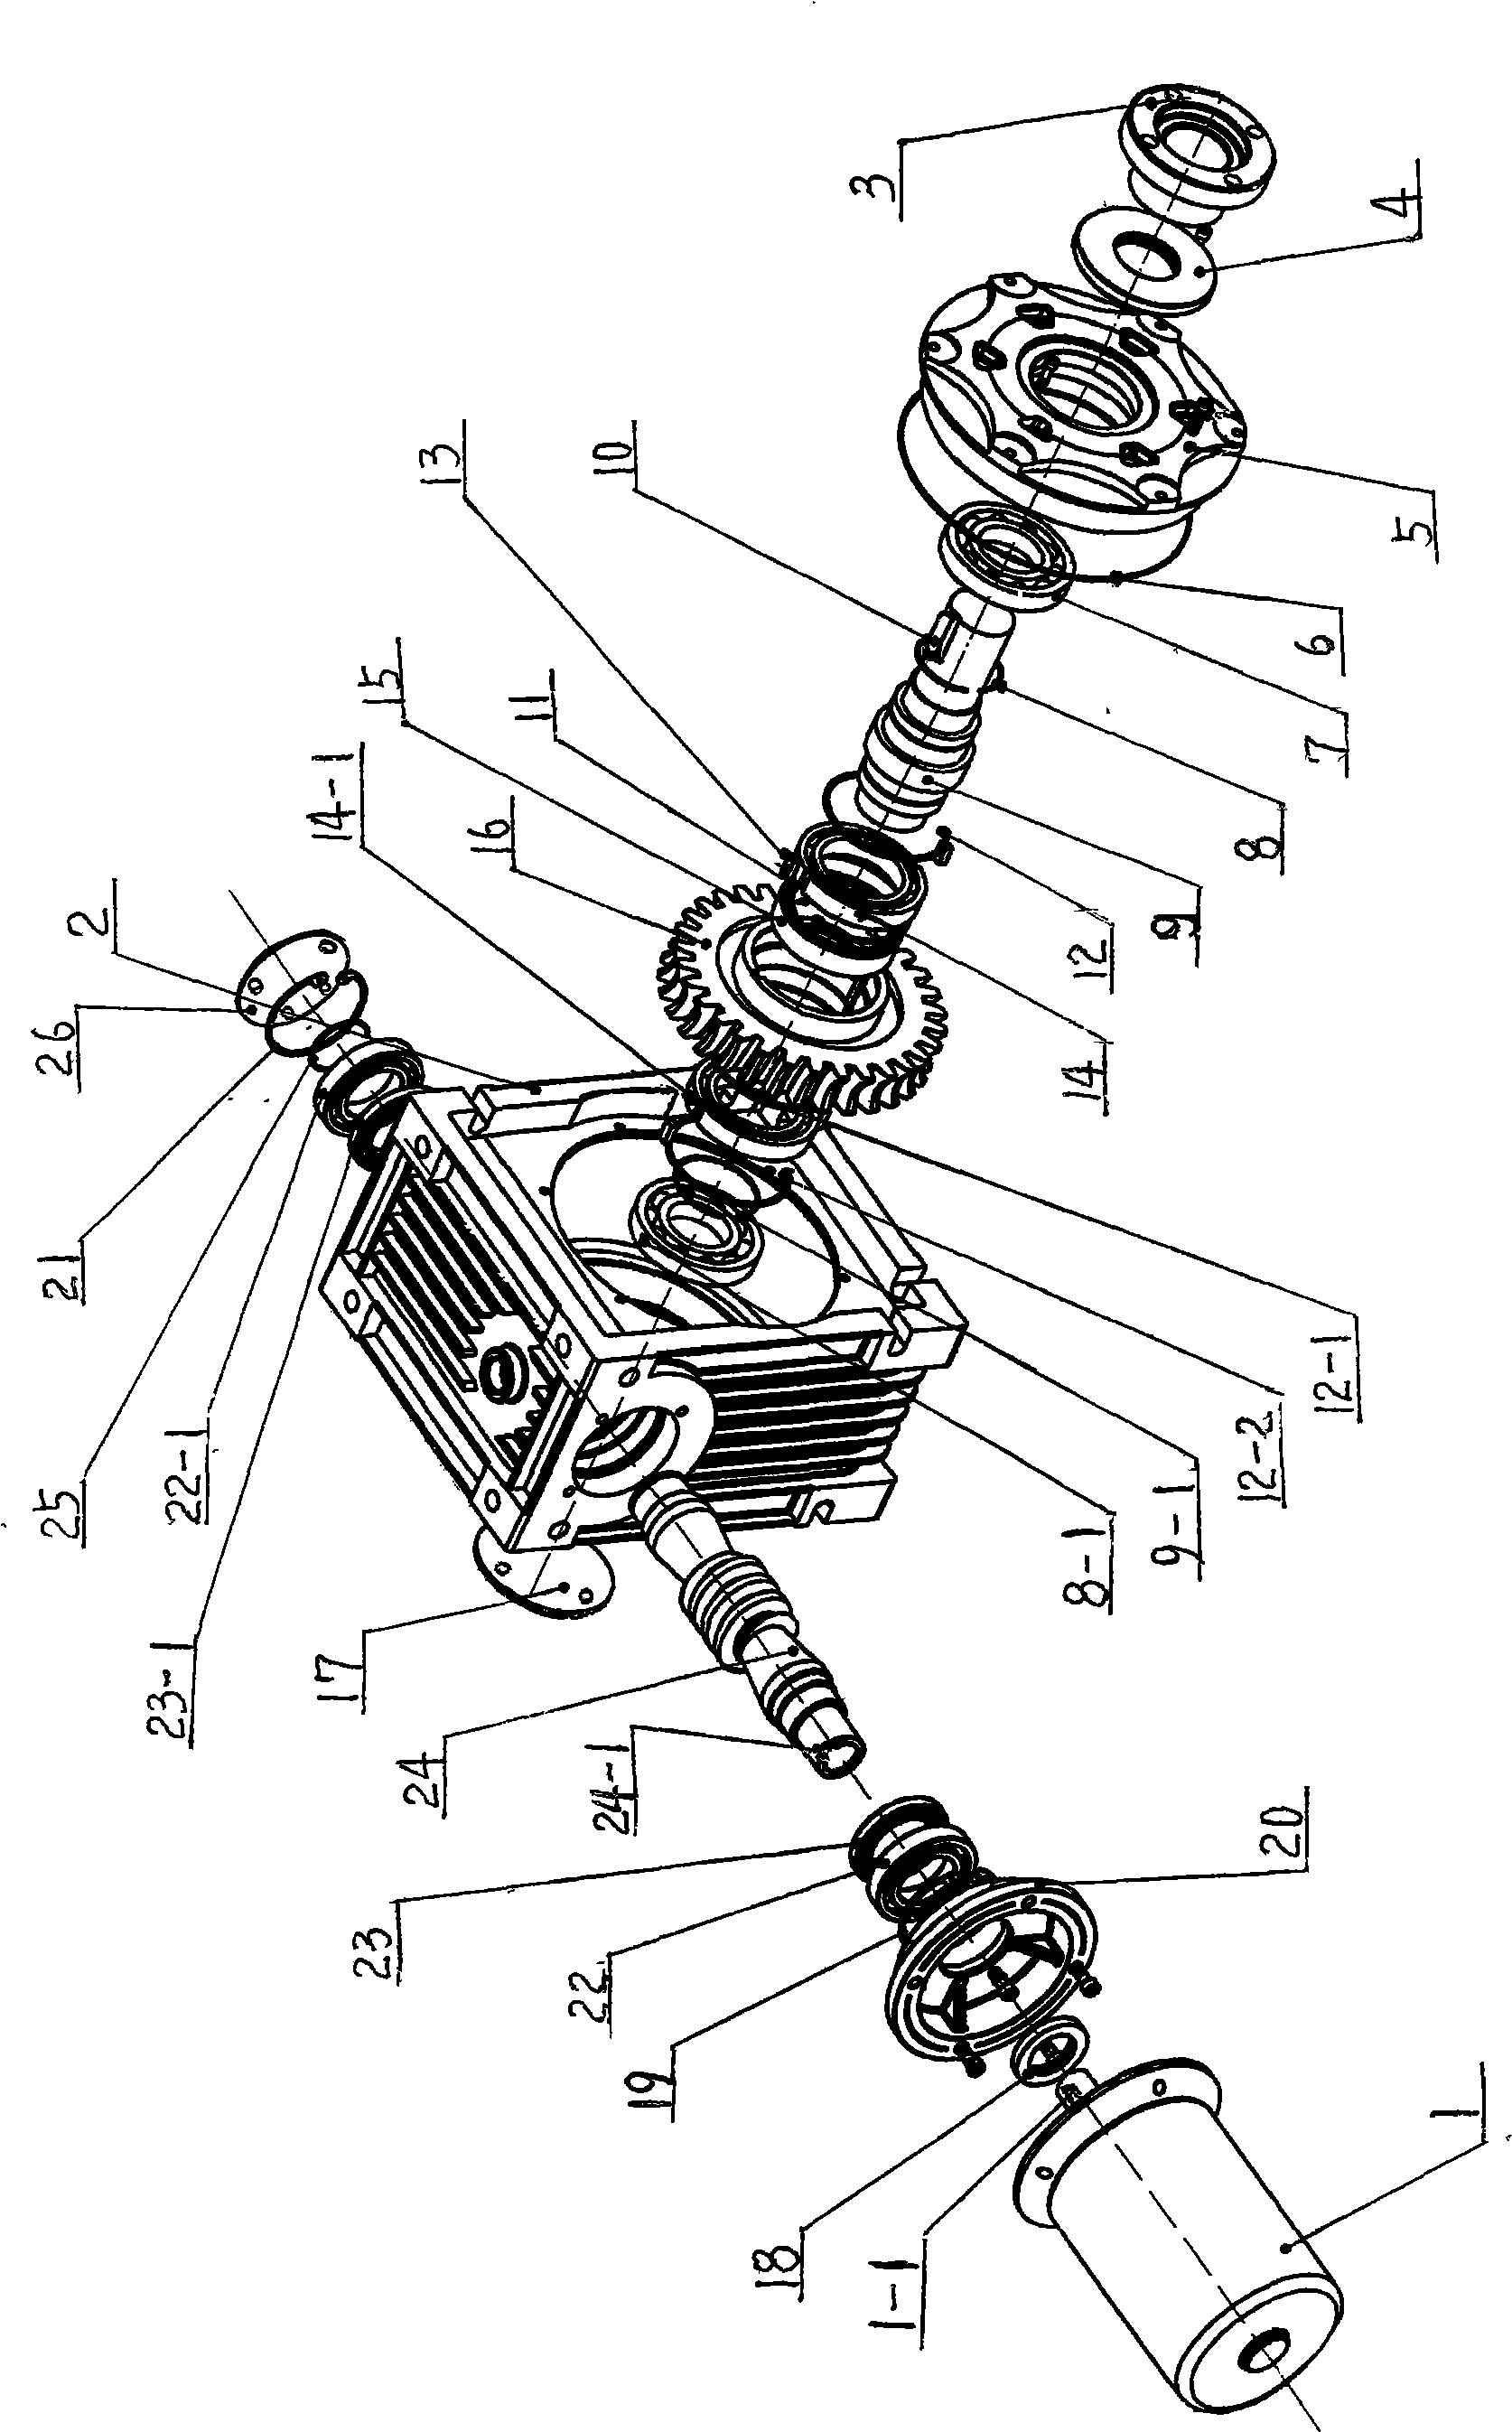 Non-return type hoister descending continuous speed regulation brake